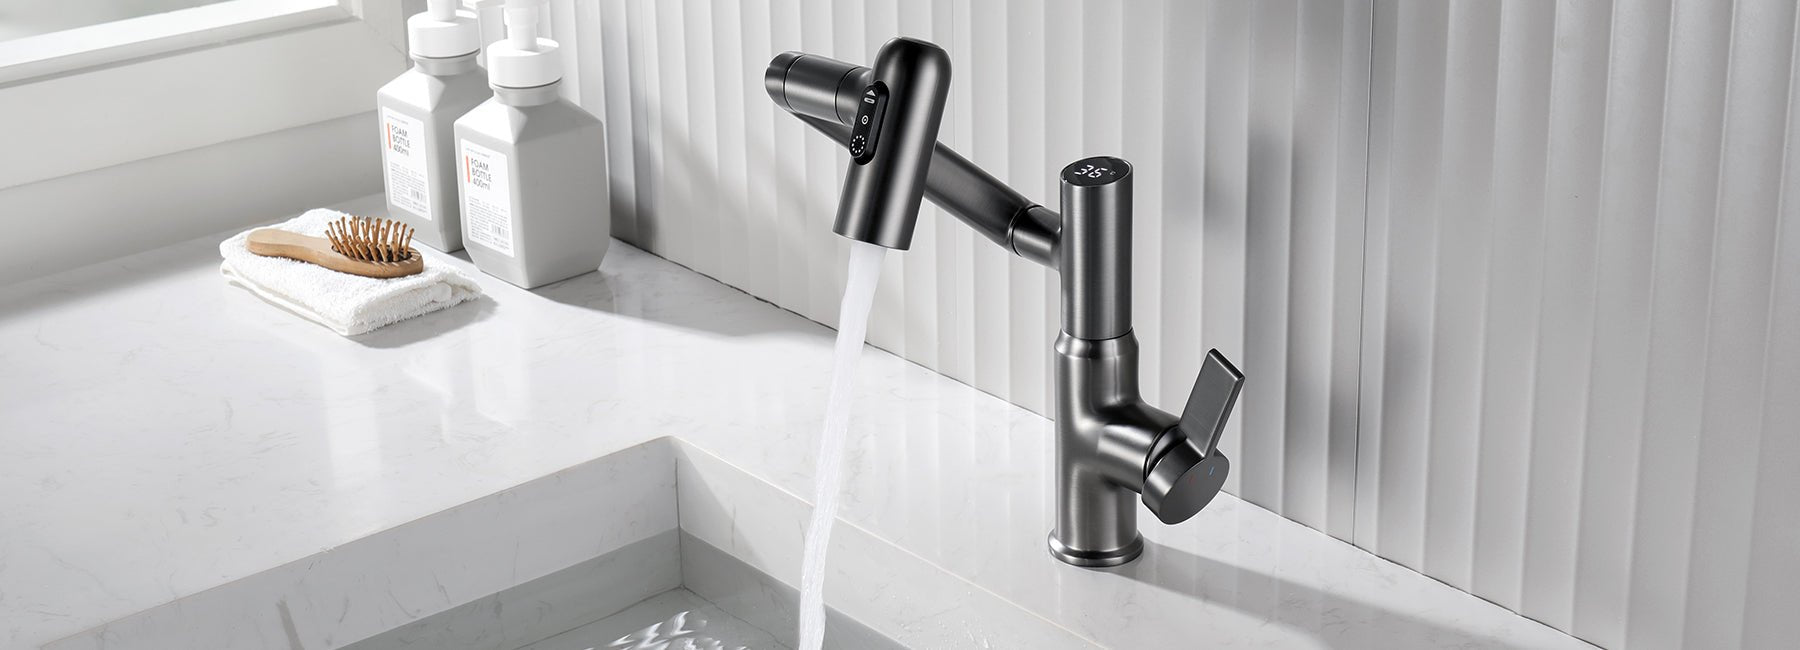 Smart Stainless Steel Bathroom Faucet